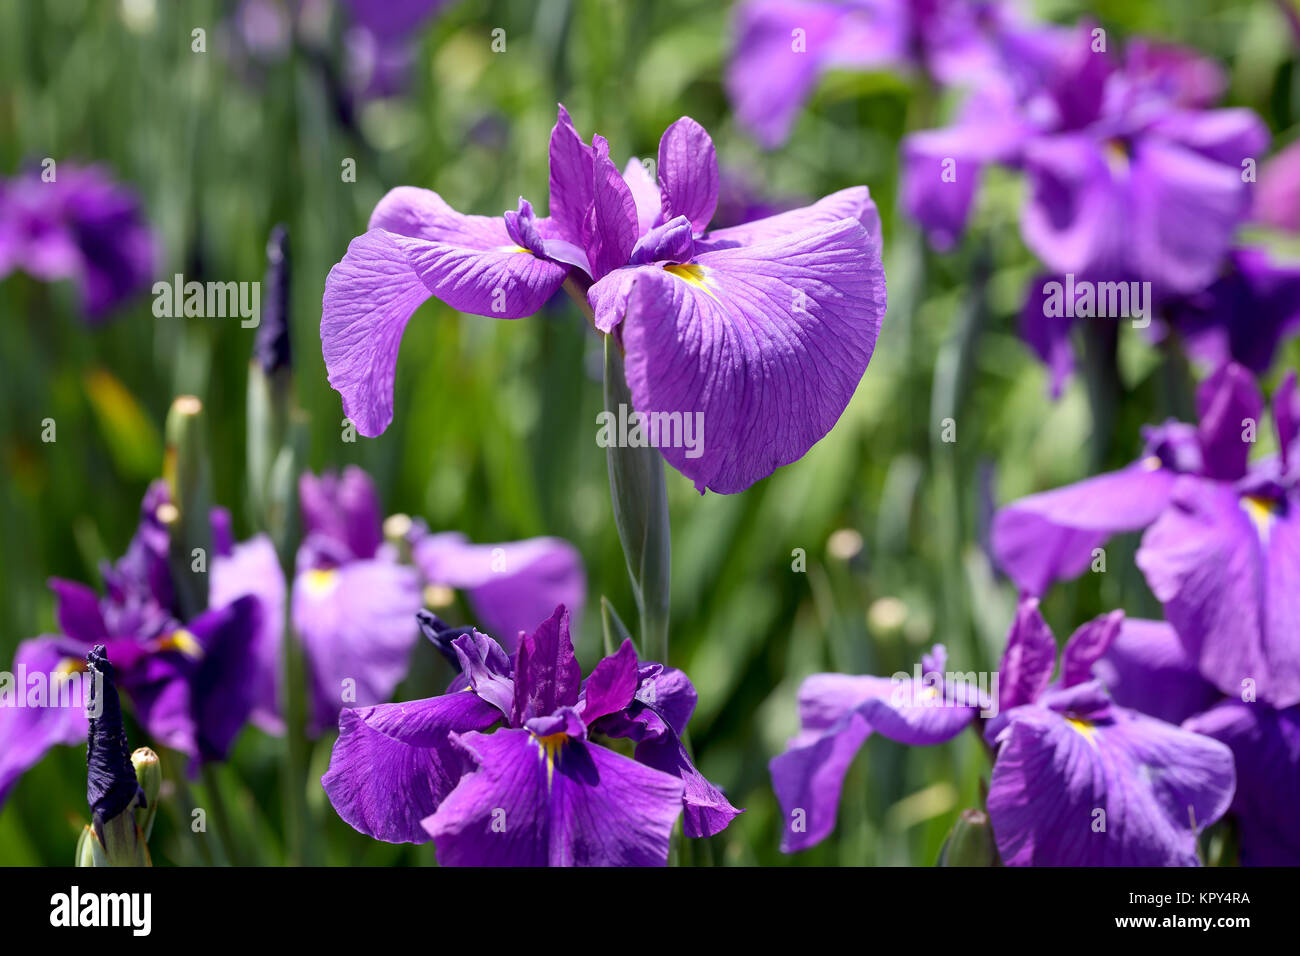 iris flower on flower bed Stock Photo